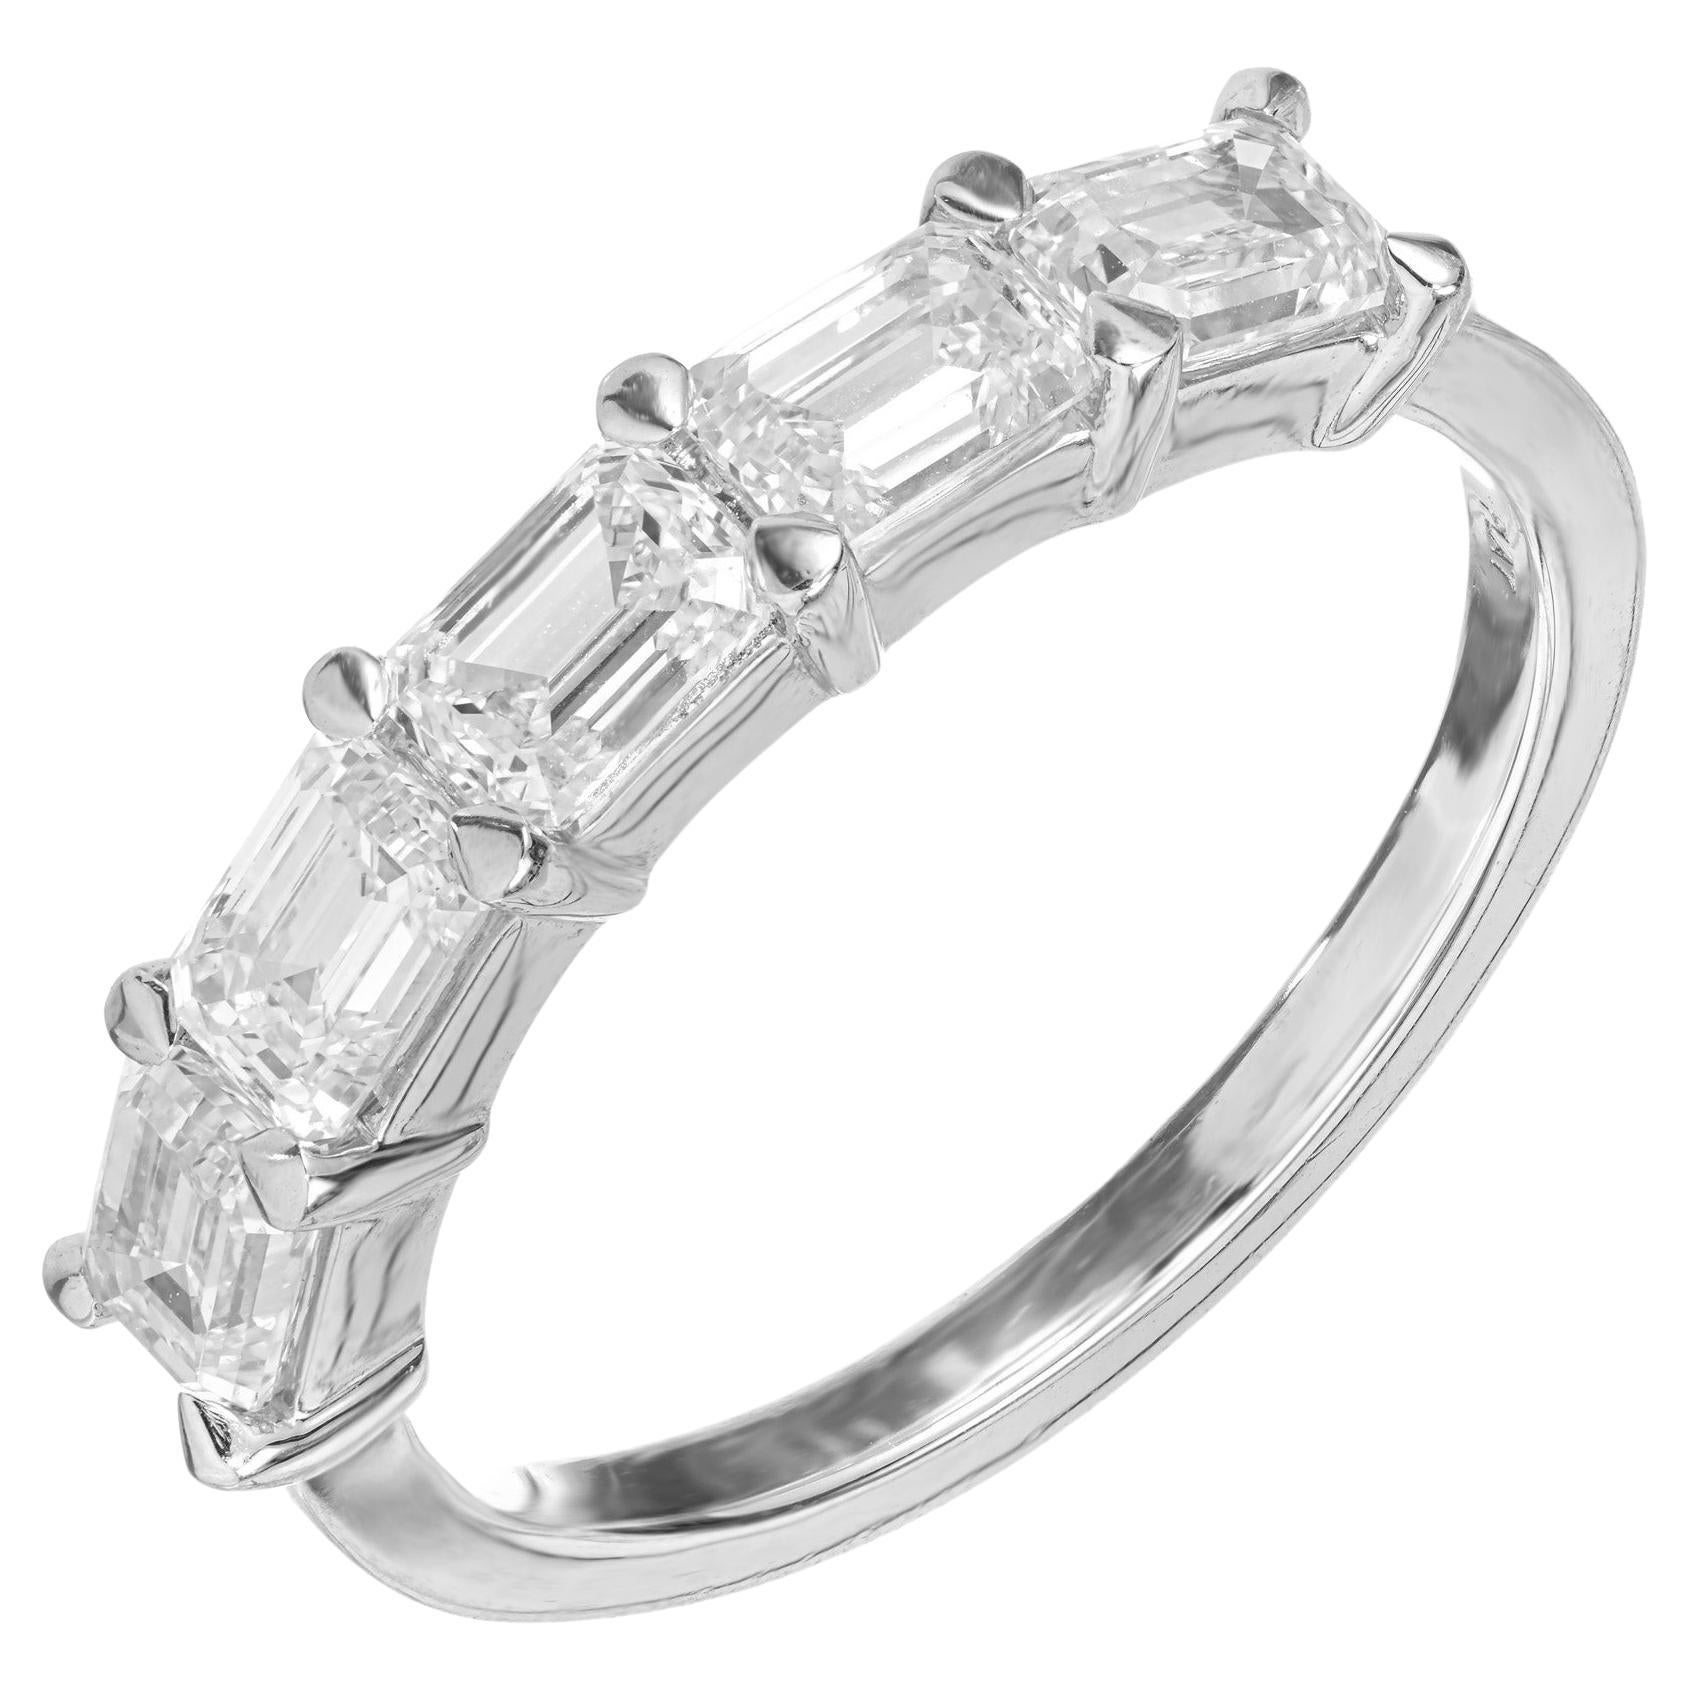 Peter Suchy 1.55 Carat Emerald Cut Diamond Platinum Wedding Band Ring